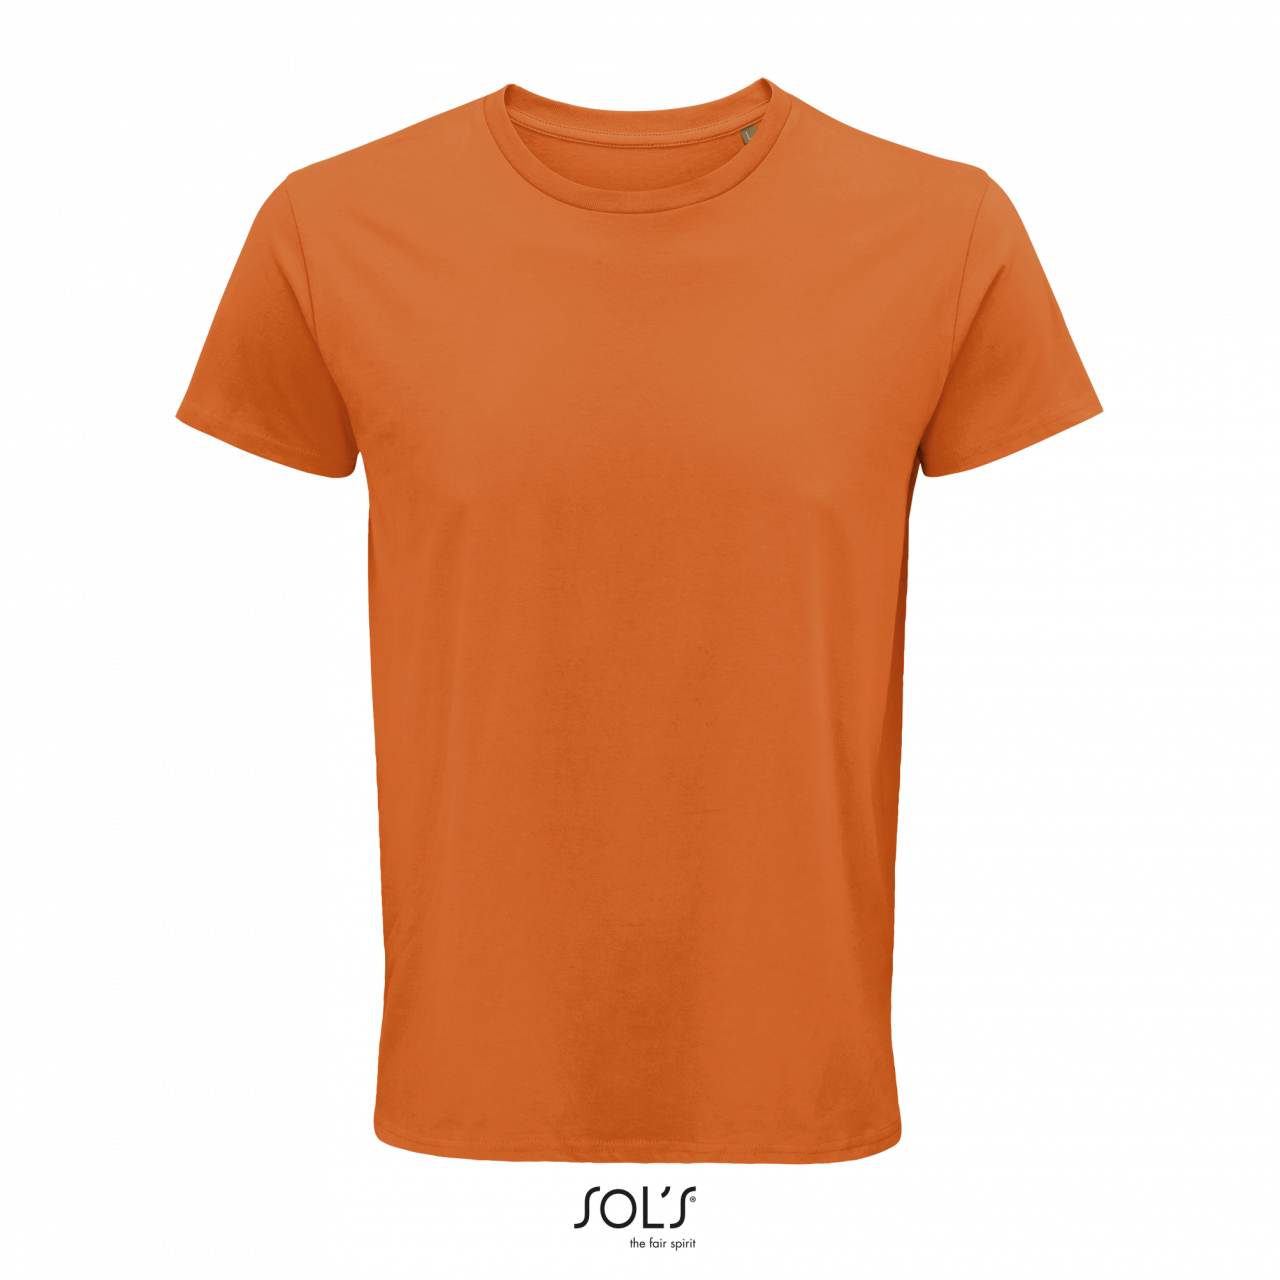 Sol's Crusader Men - Round-neck Fitted Jersey T-shirt - Sol's Crusader Men - Round-neck Fitted Jersey T-shirt - Orange